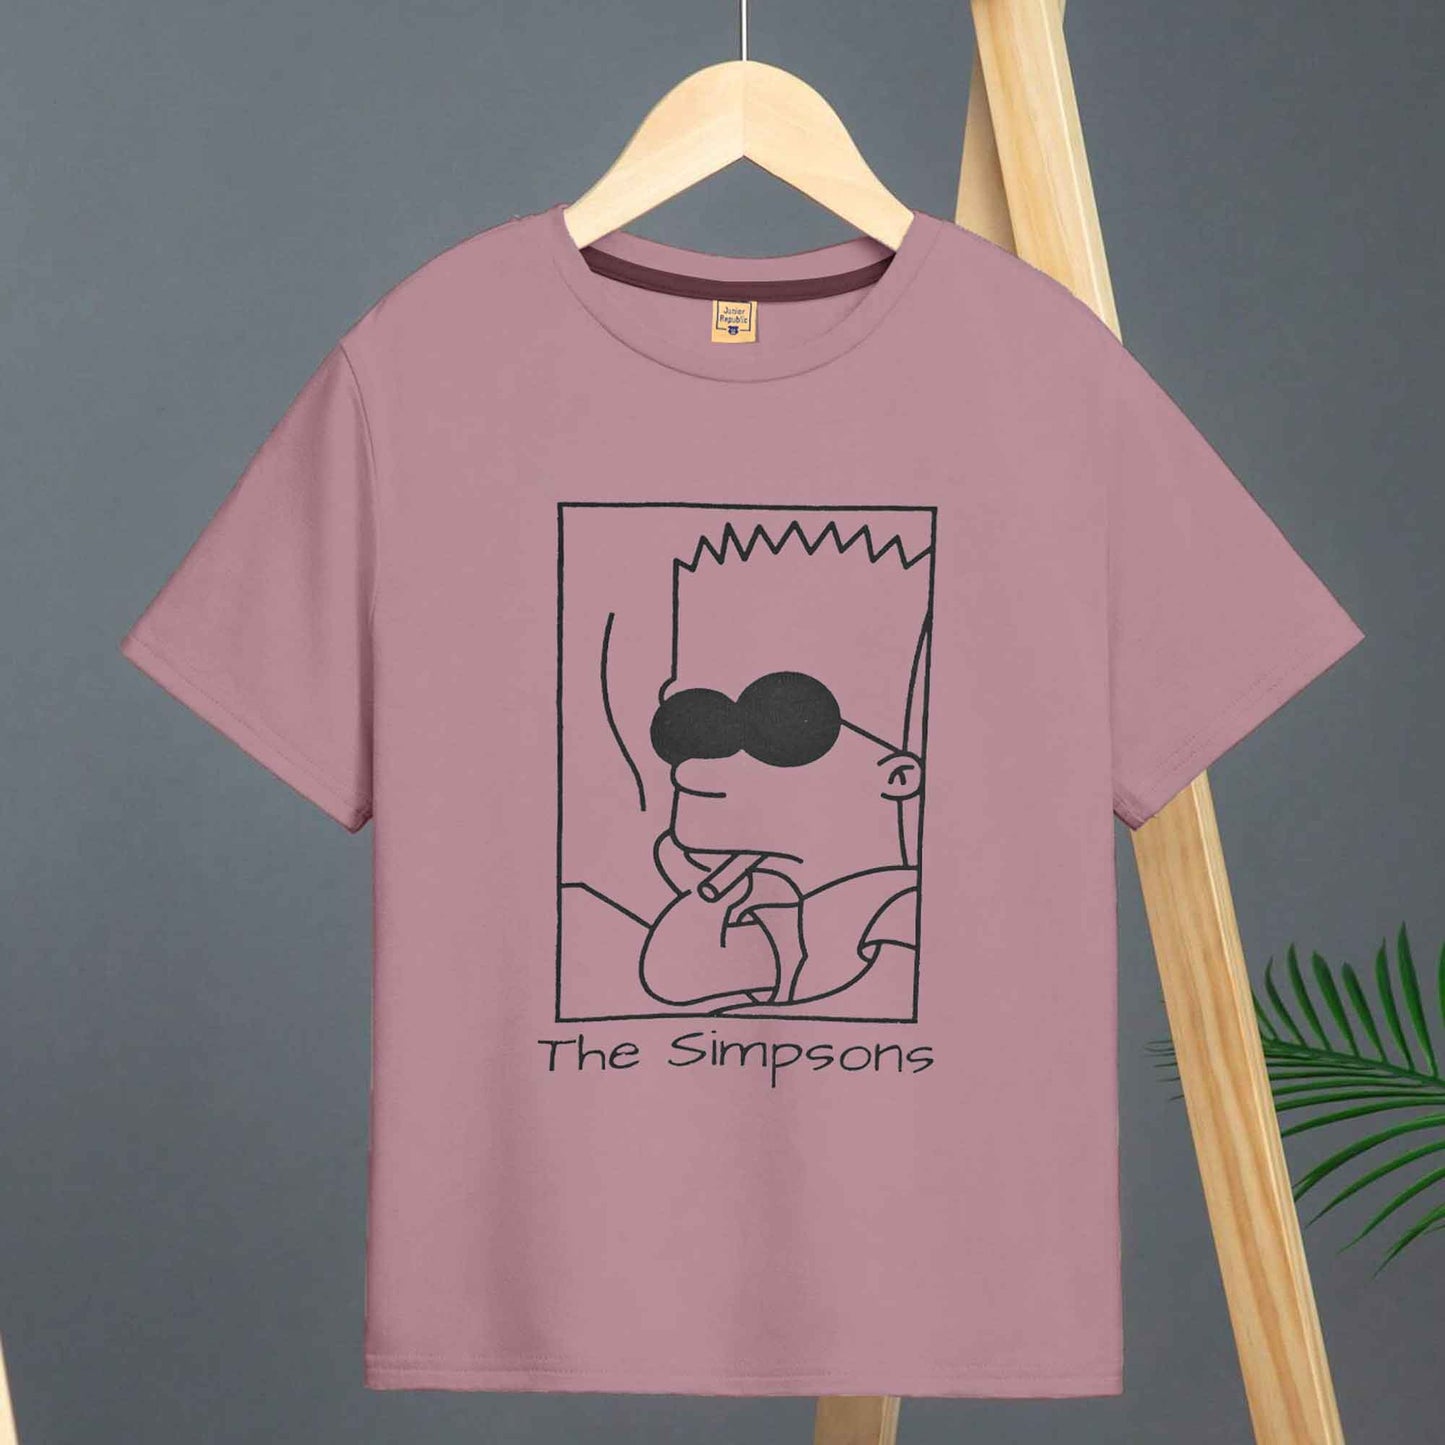 Junior Republic Kid's The Simpsons Printed Tee Shirt Boy's Tee Shirt JRR Plum 1-2 Years 